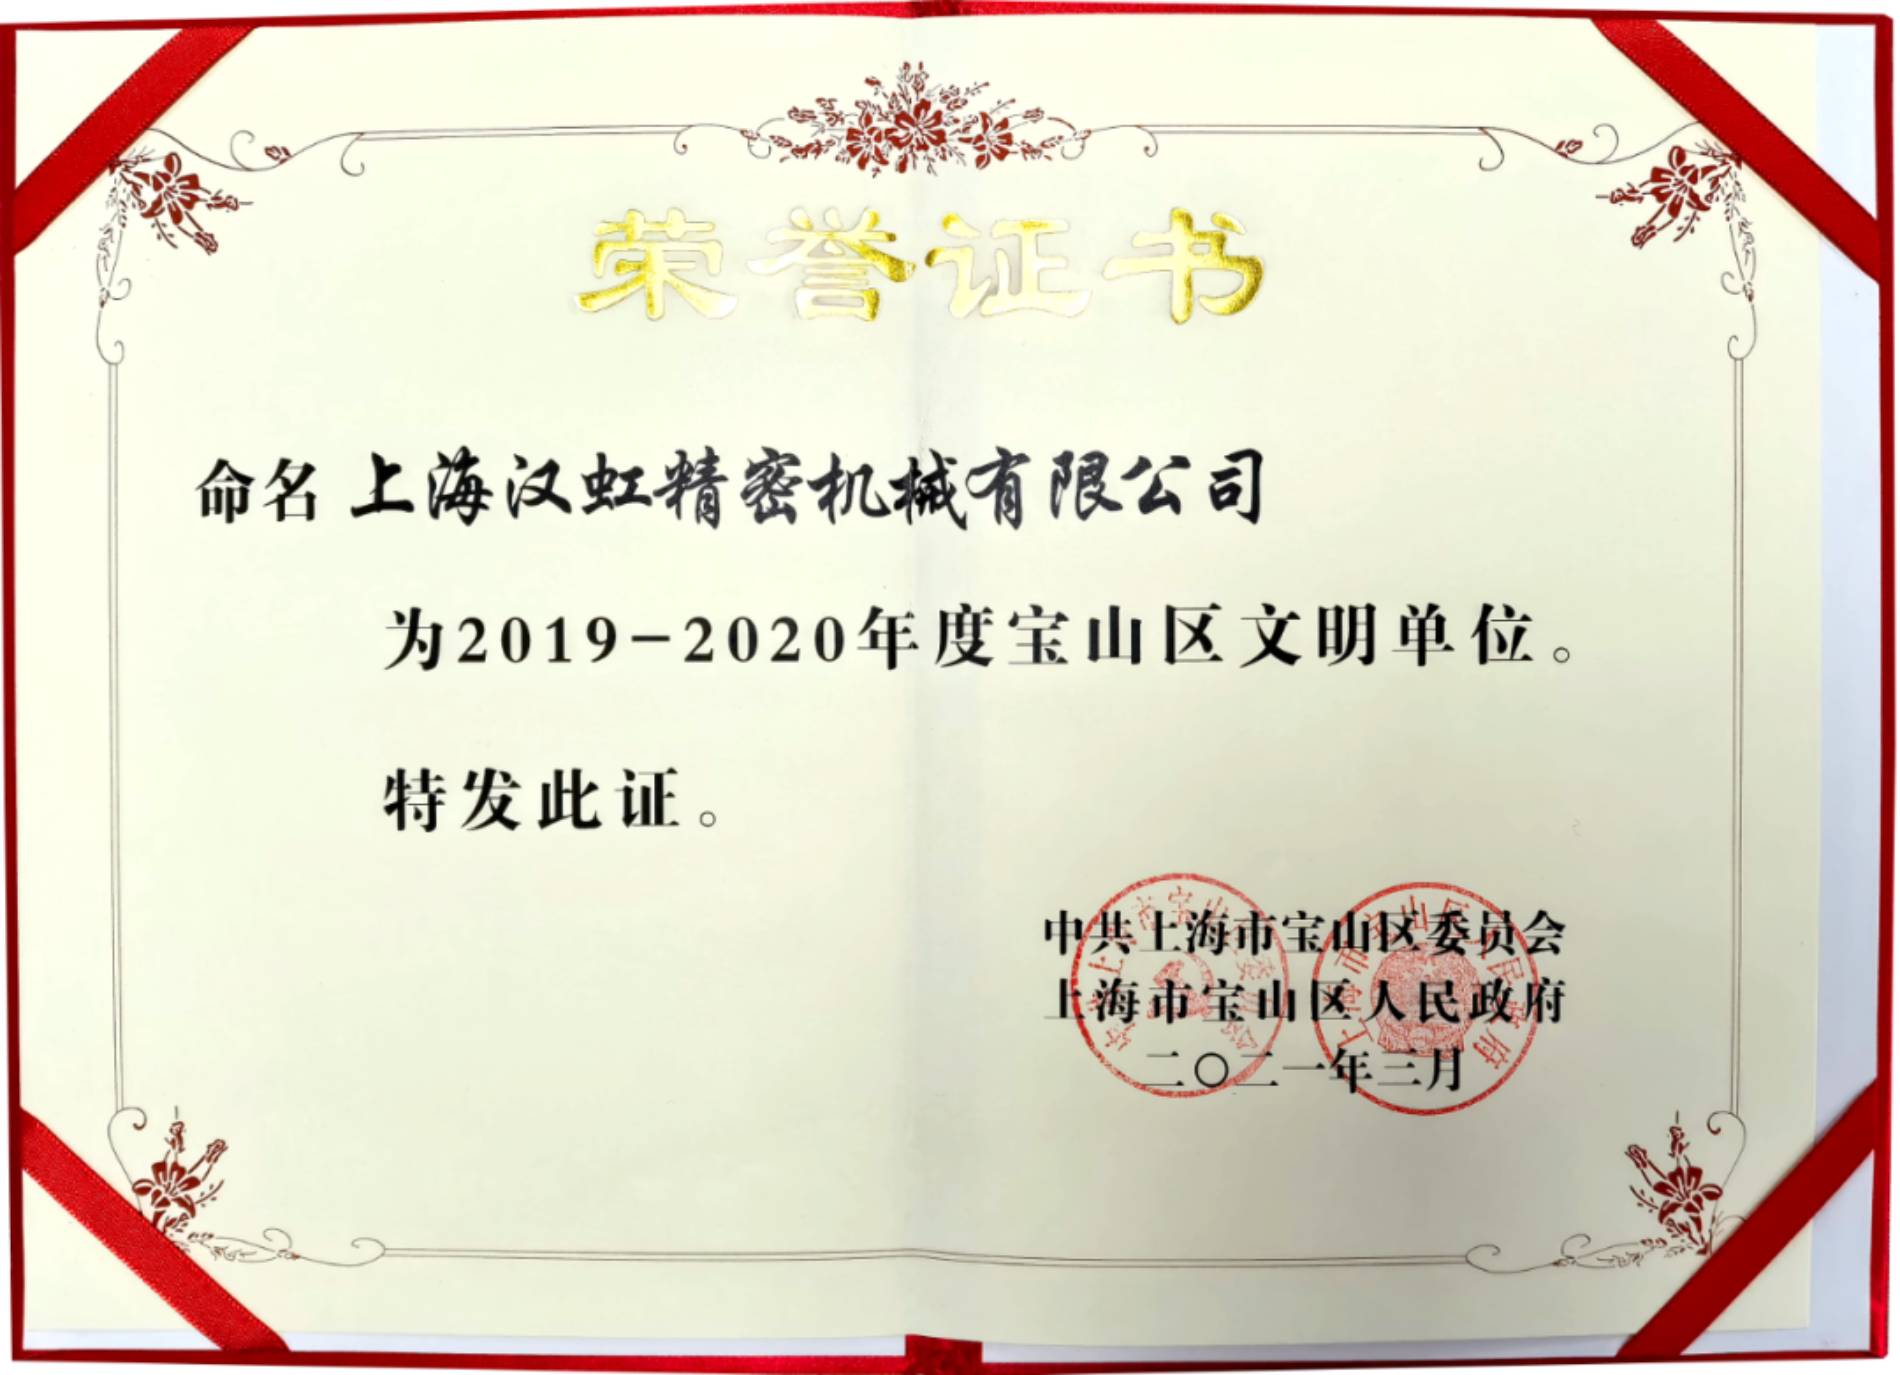 Shanghai Hanhong Precision Machinery Co.,Ltd. won the honor of Baoshan civilized unit in 2019-2020